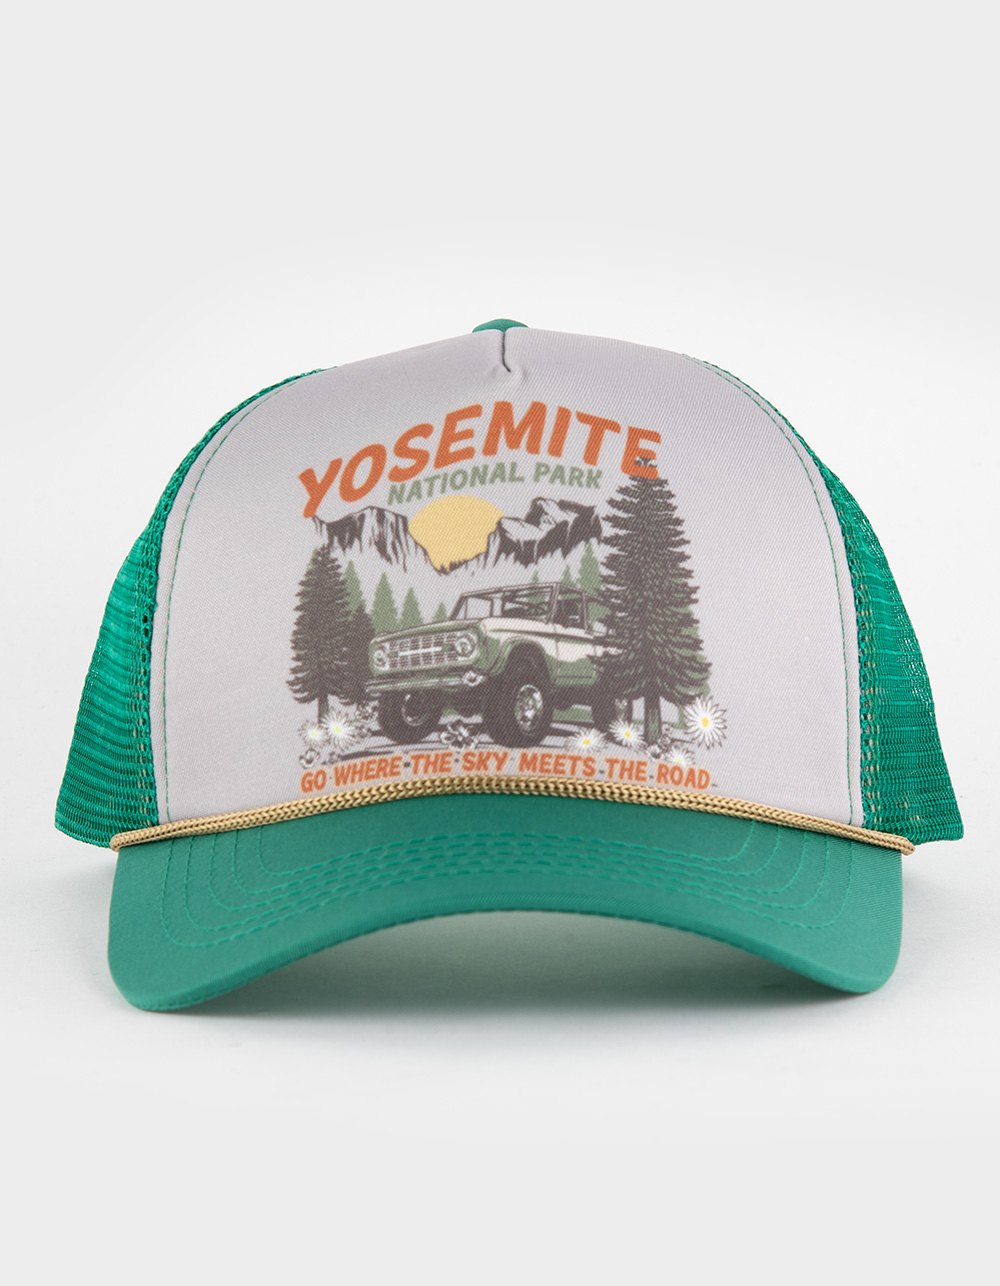 Yosemite Trucker Hat - Green - One Size